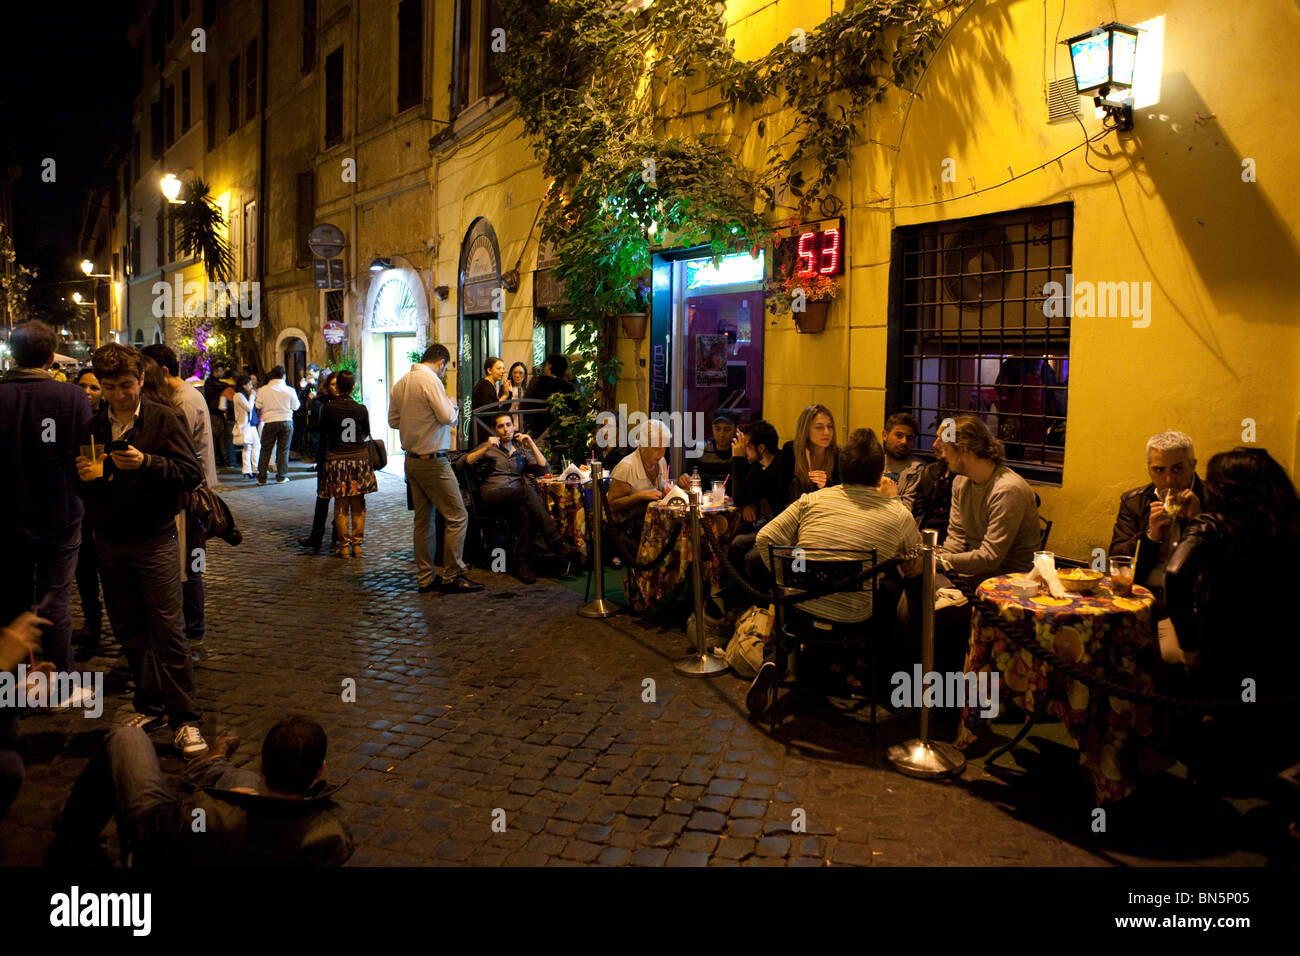 La vita notturna a Trastevere, Roma, Italia Foto stock - Alamy